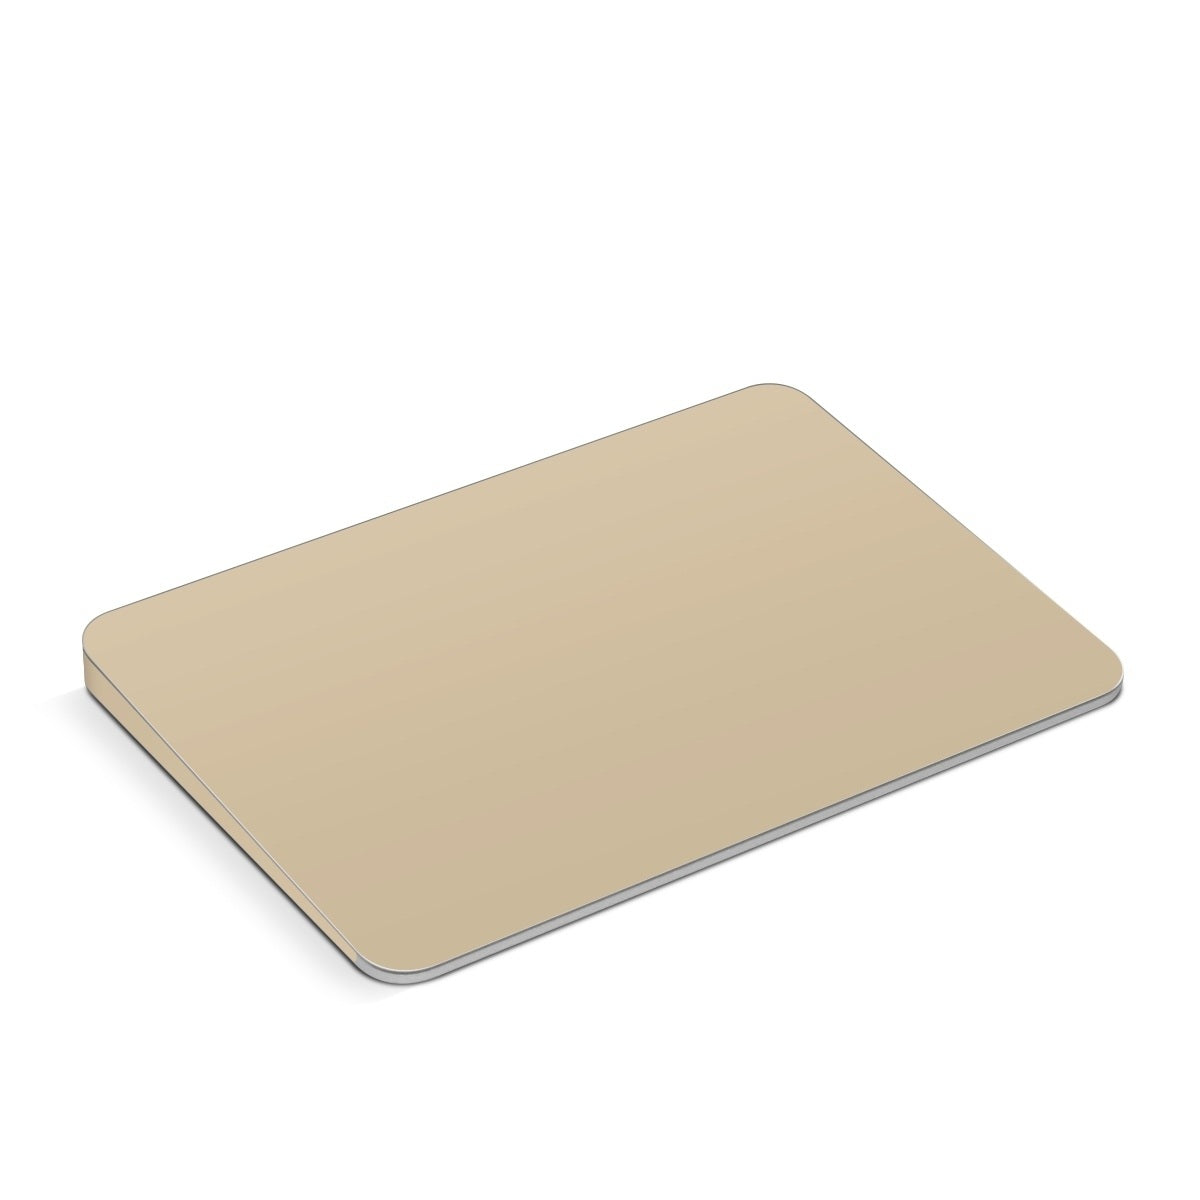 Solid State Beige - Apple Magic Trackpad Skin